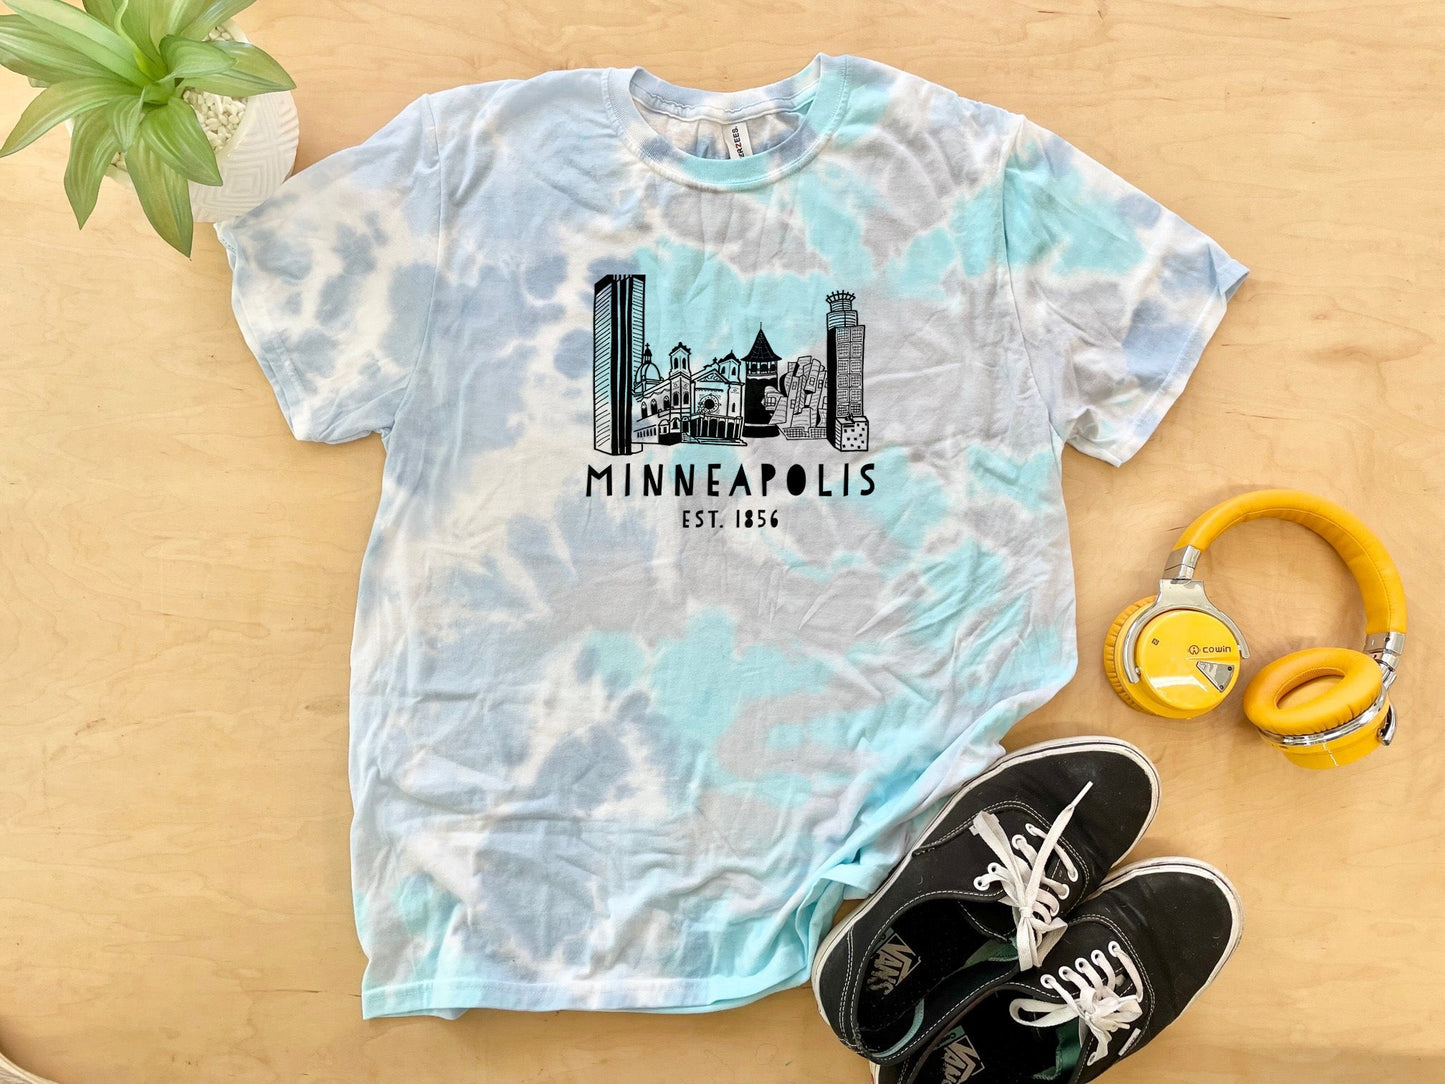 Minneapolis (MN) - Mens/Unisex Tie Dye Tee - Blue